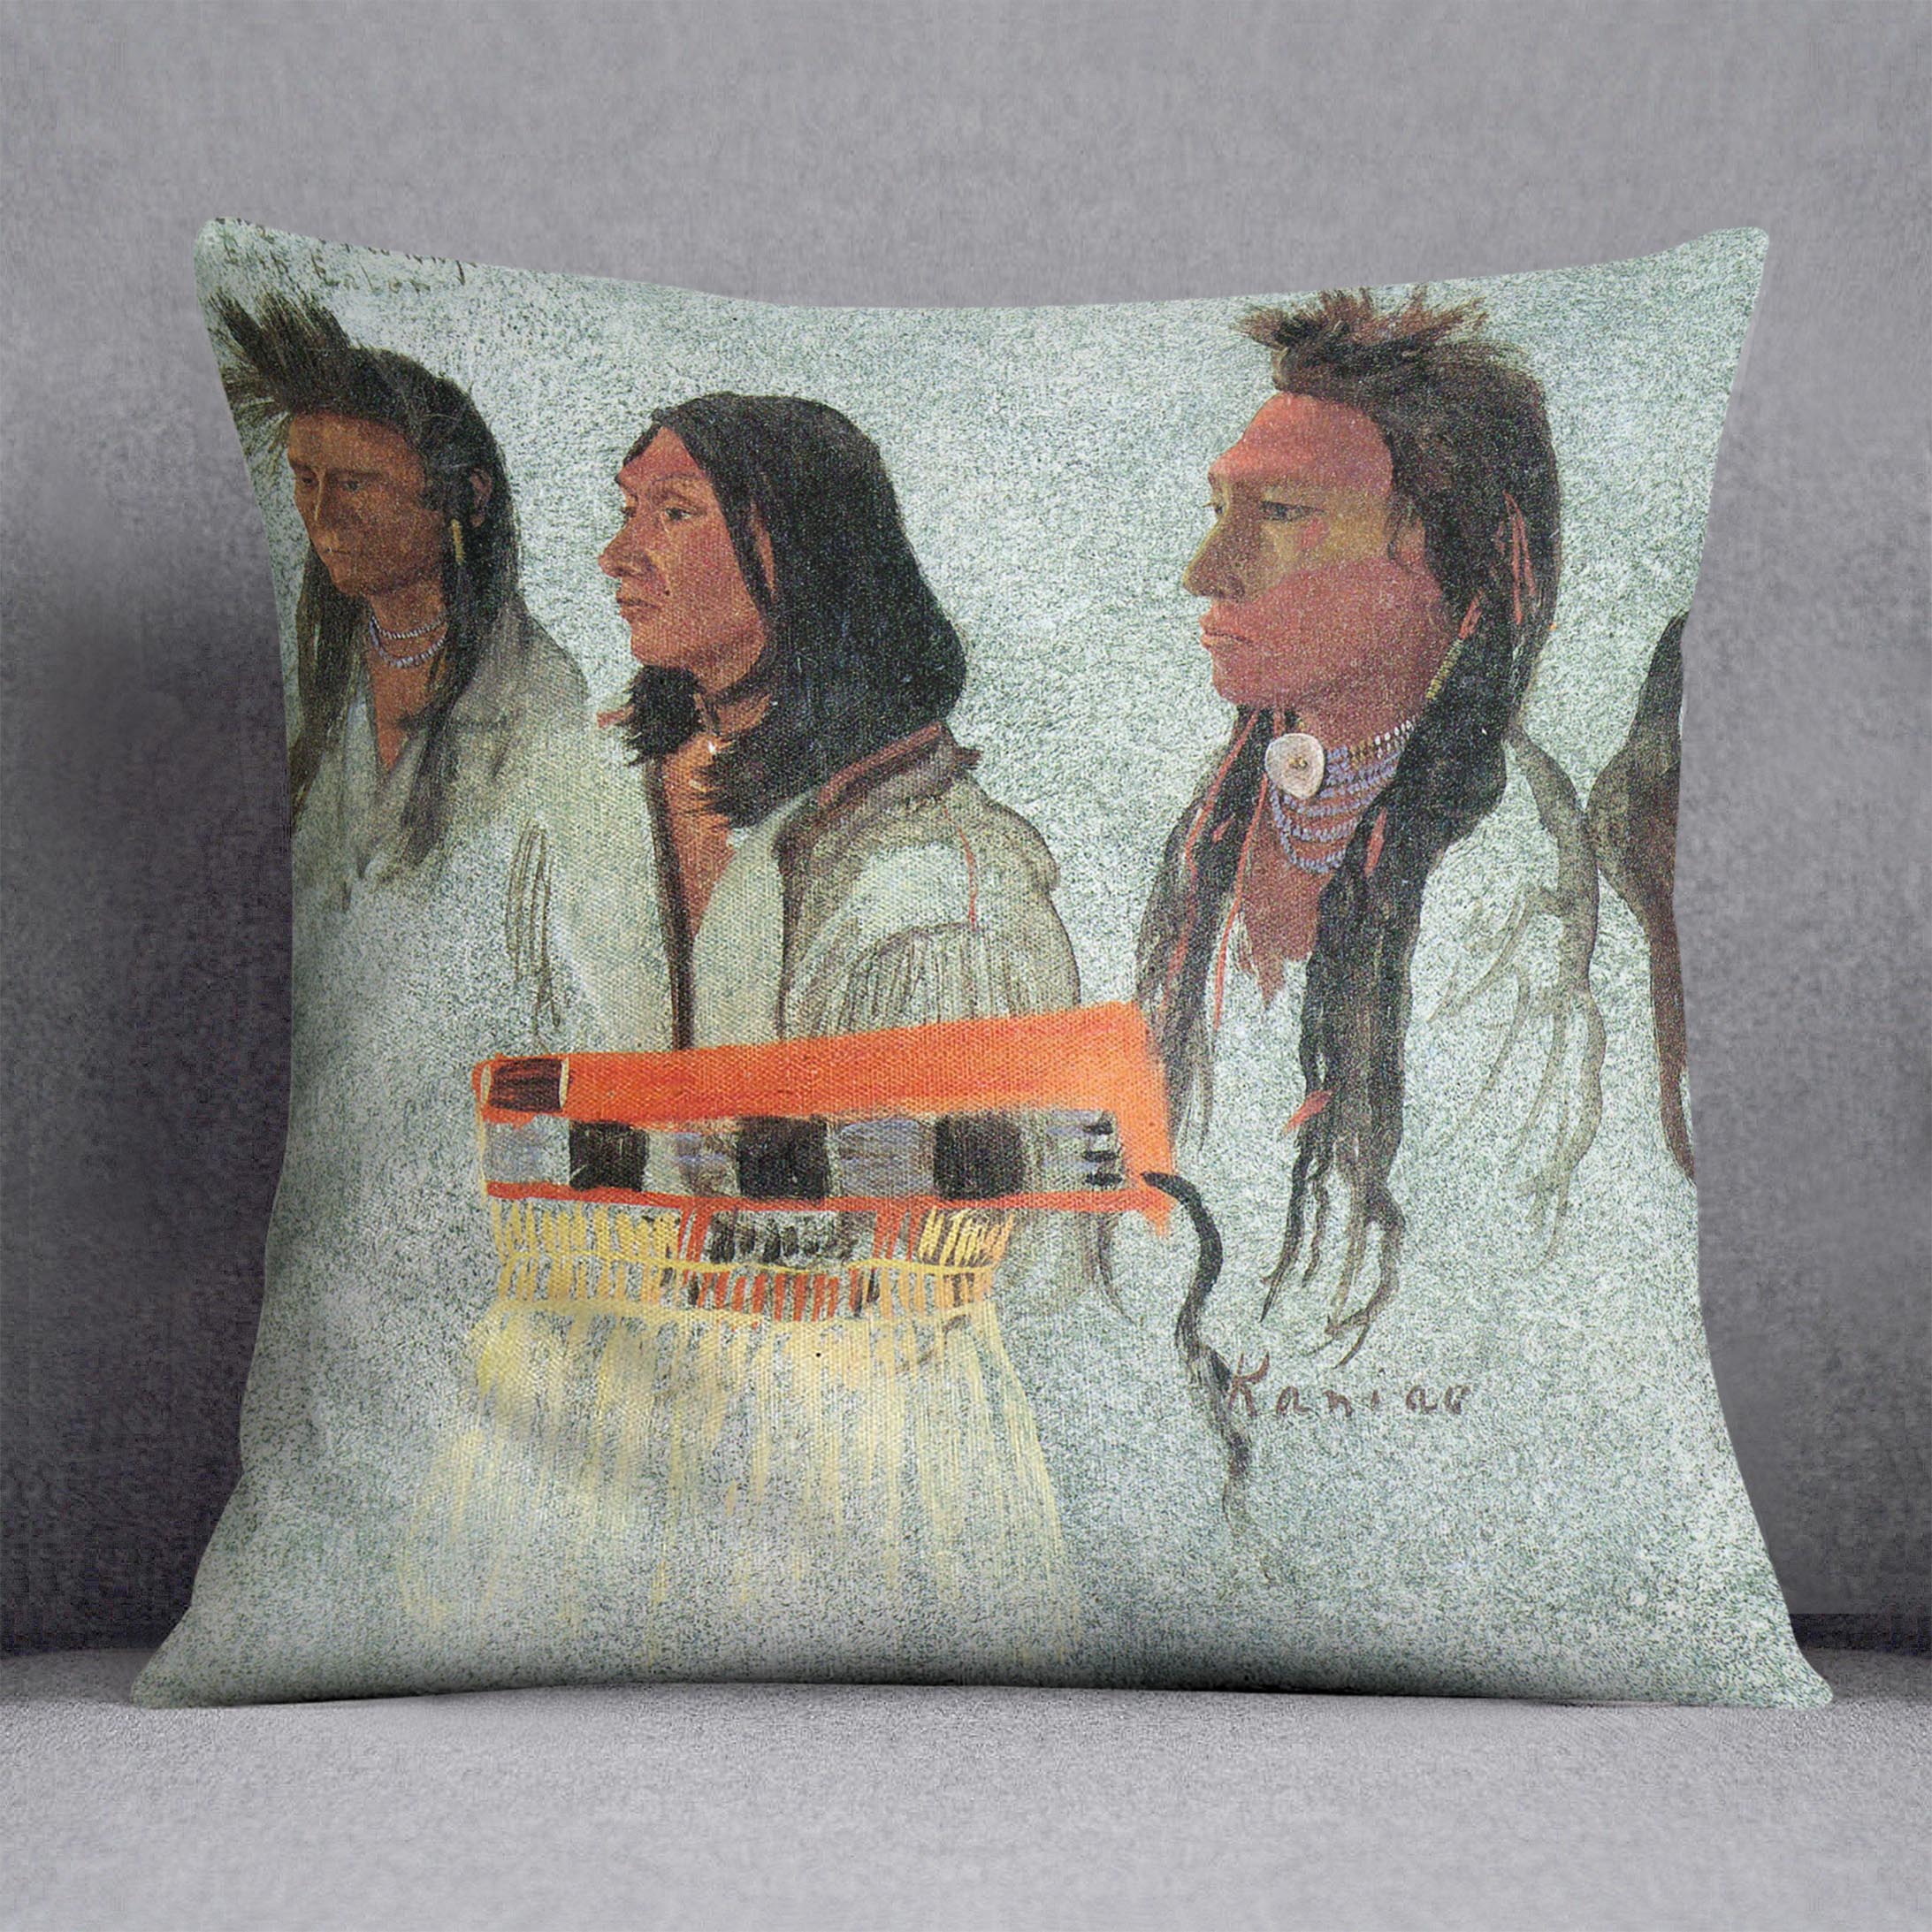 Four Indians by Bierstadt Cushion - Canvas Art Rocks - 1